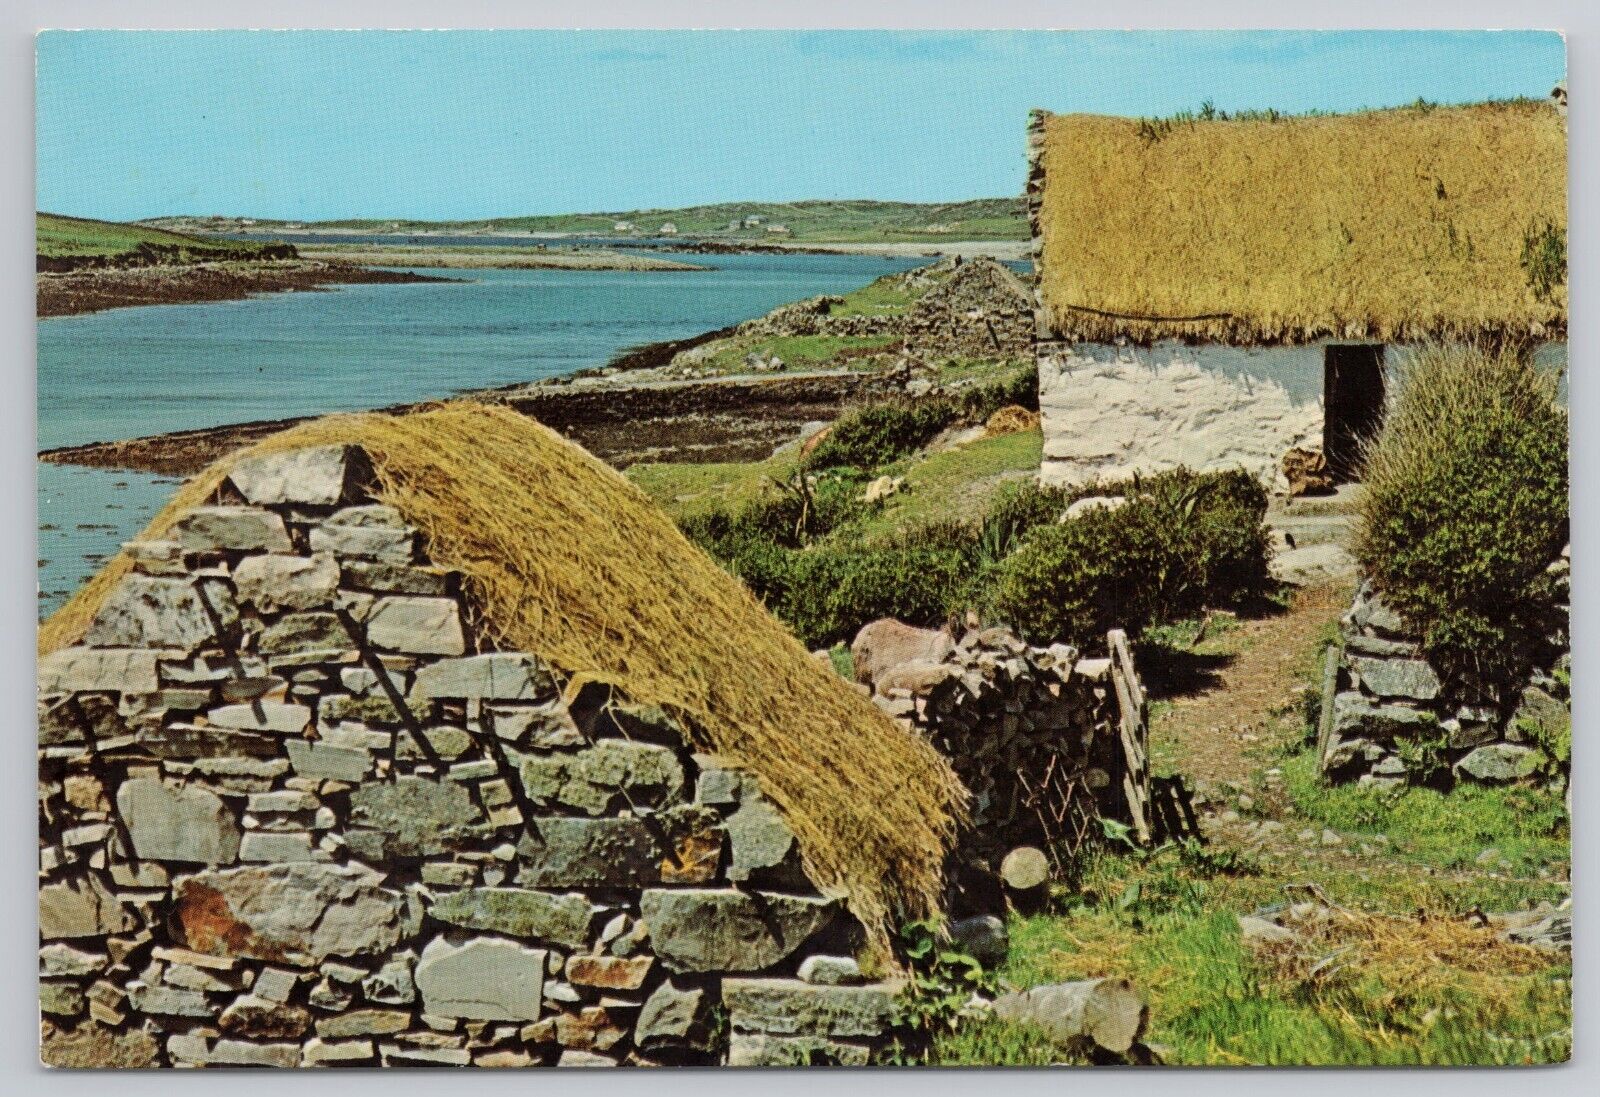 Connemara County Galway Ireland, Clifden Bay at Belleek, Vintage Postcard